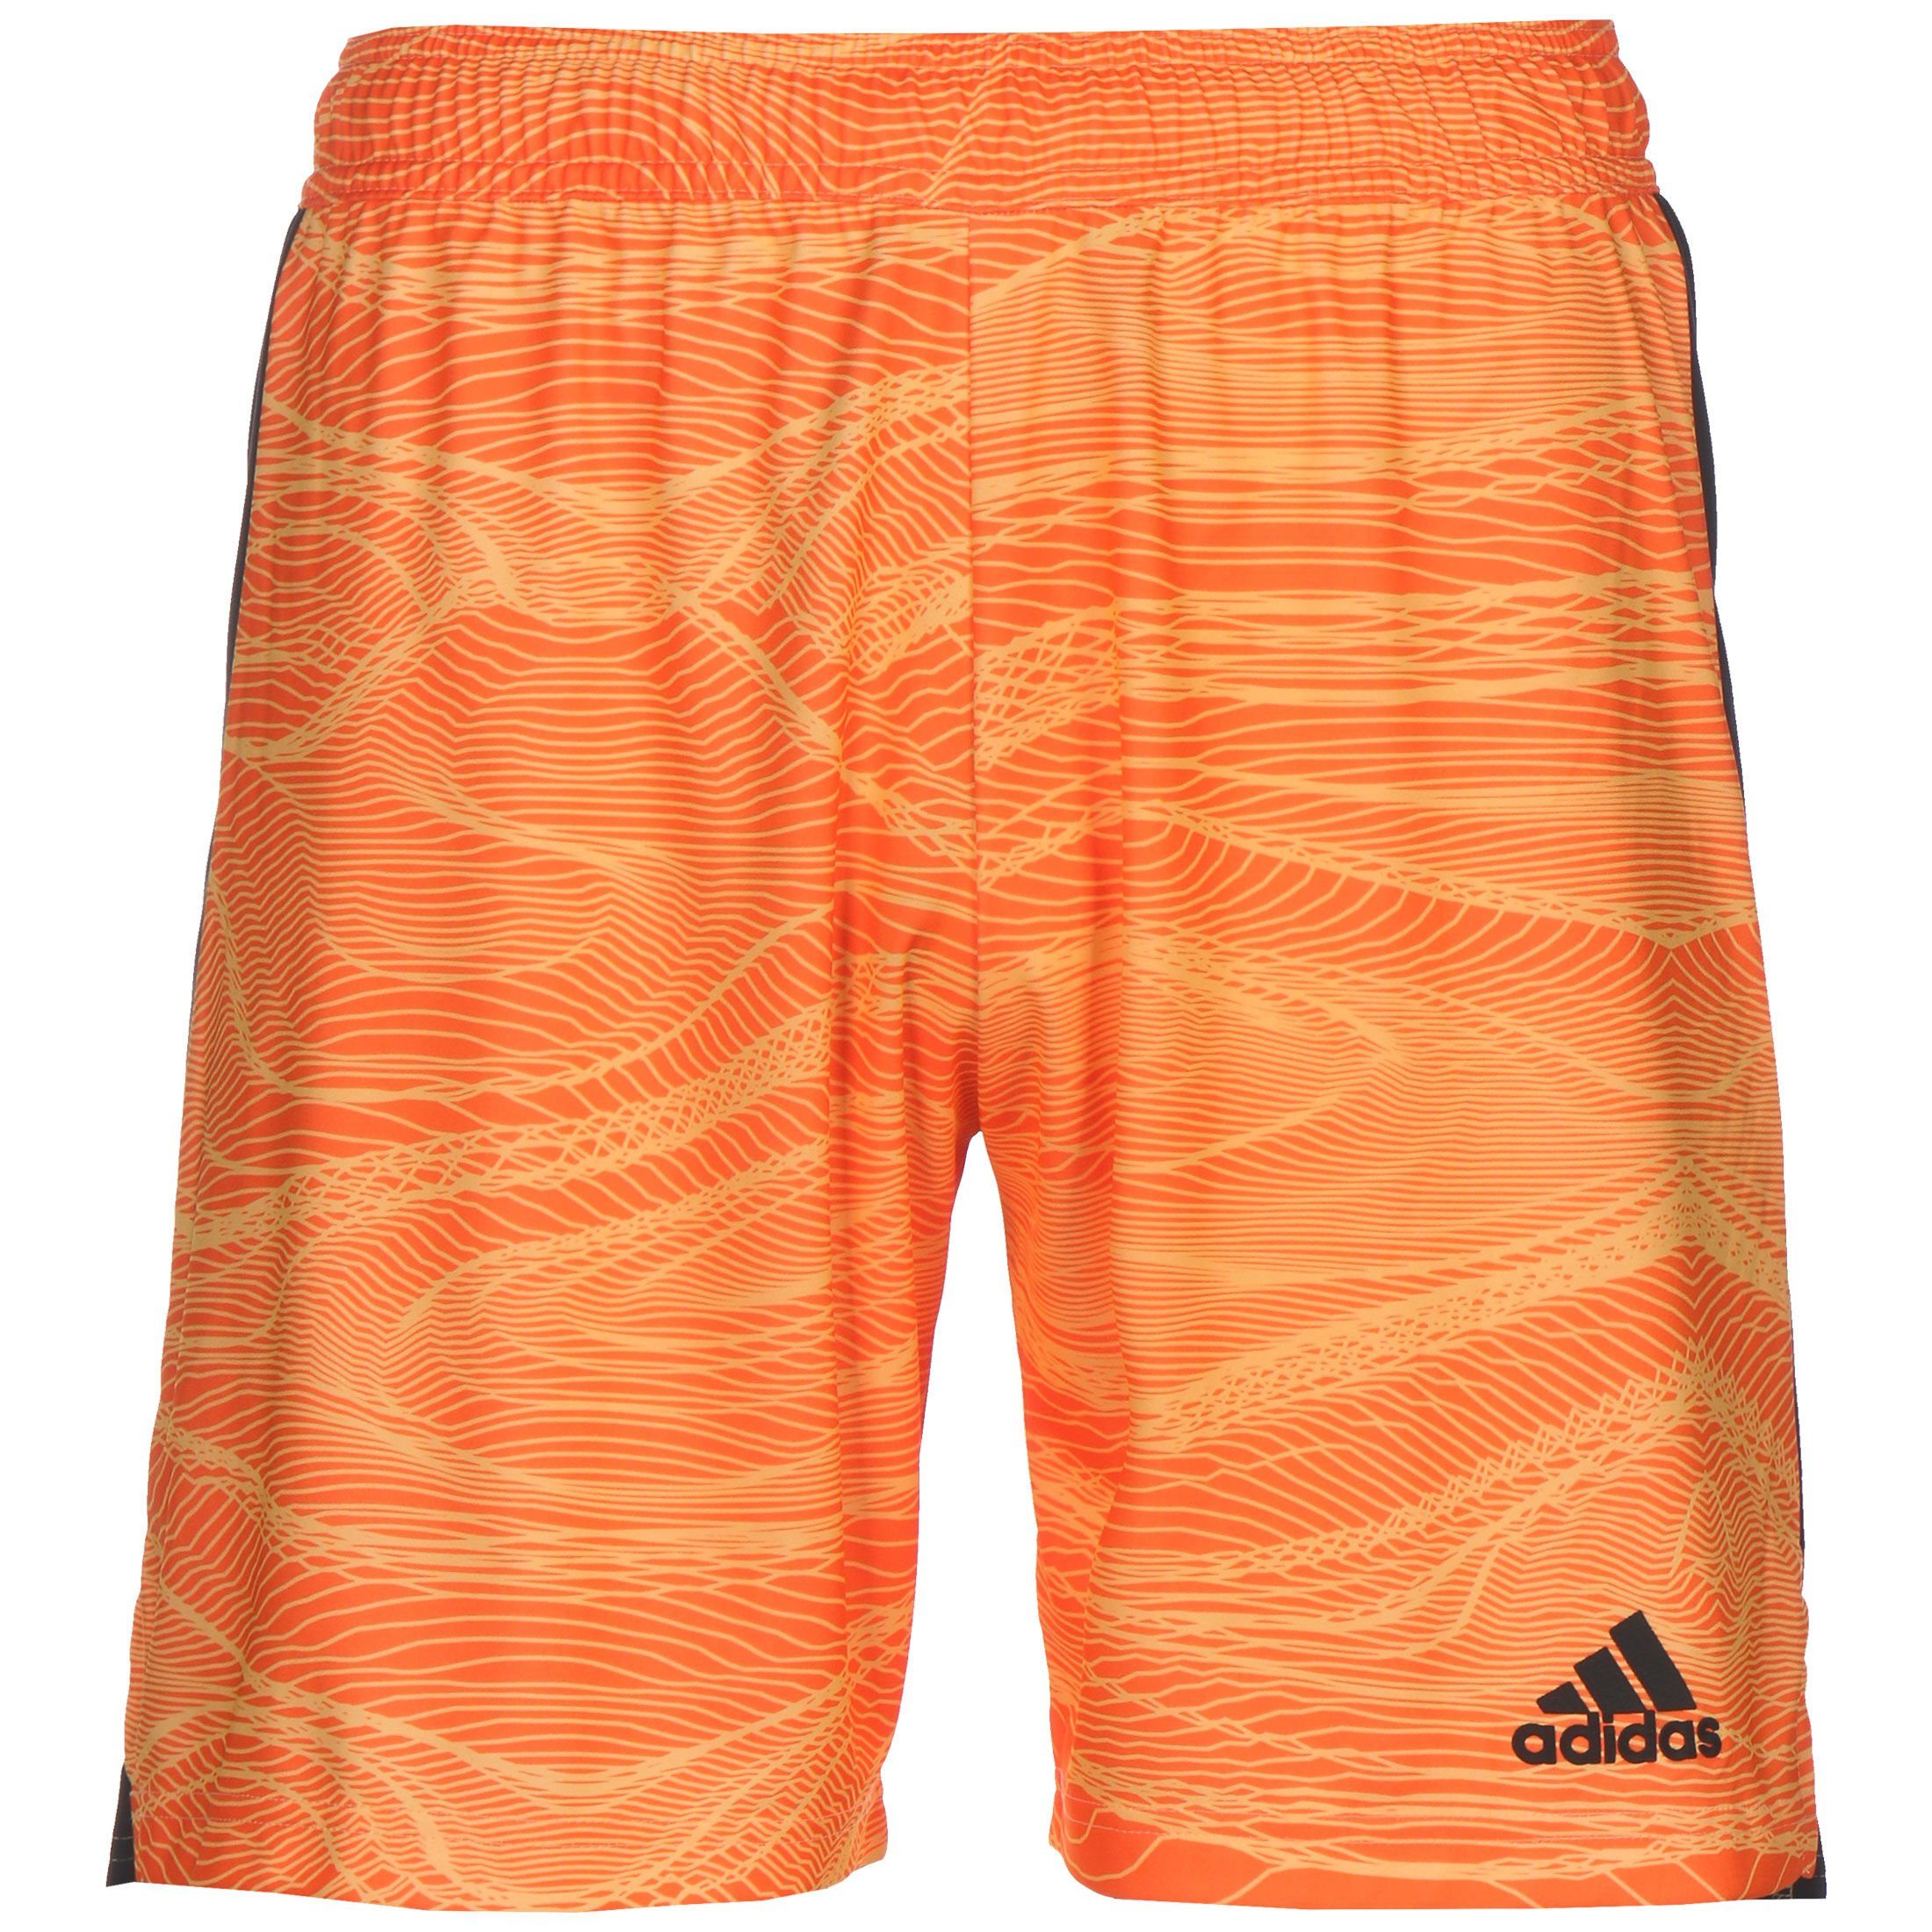 adidas Performance Torwarthose Condivo 21 Goalkeeper Shorts Herren orange